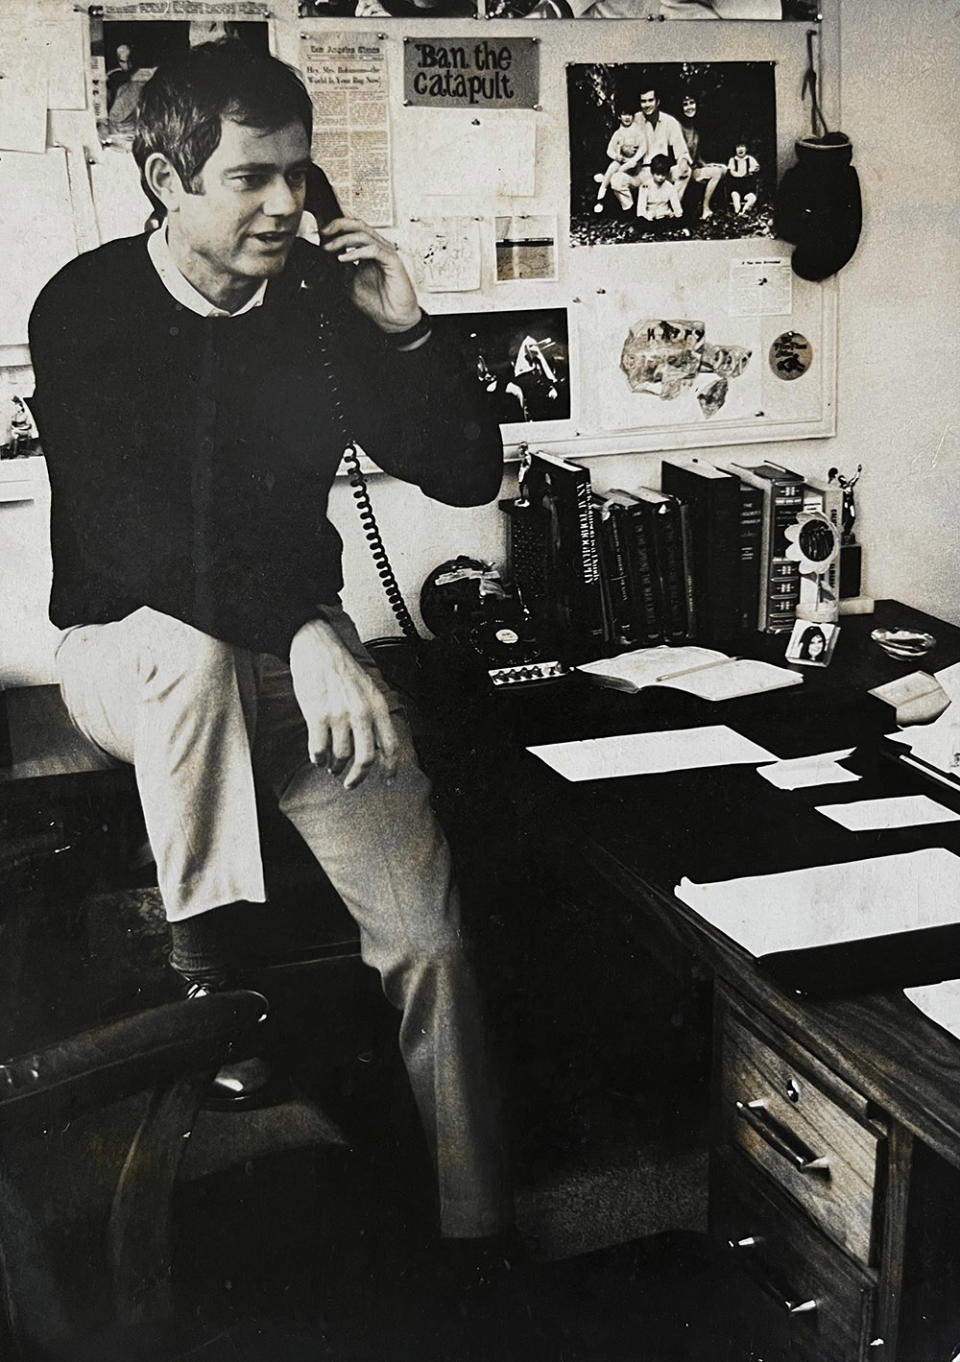 Producer Larry Turman